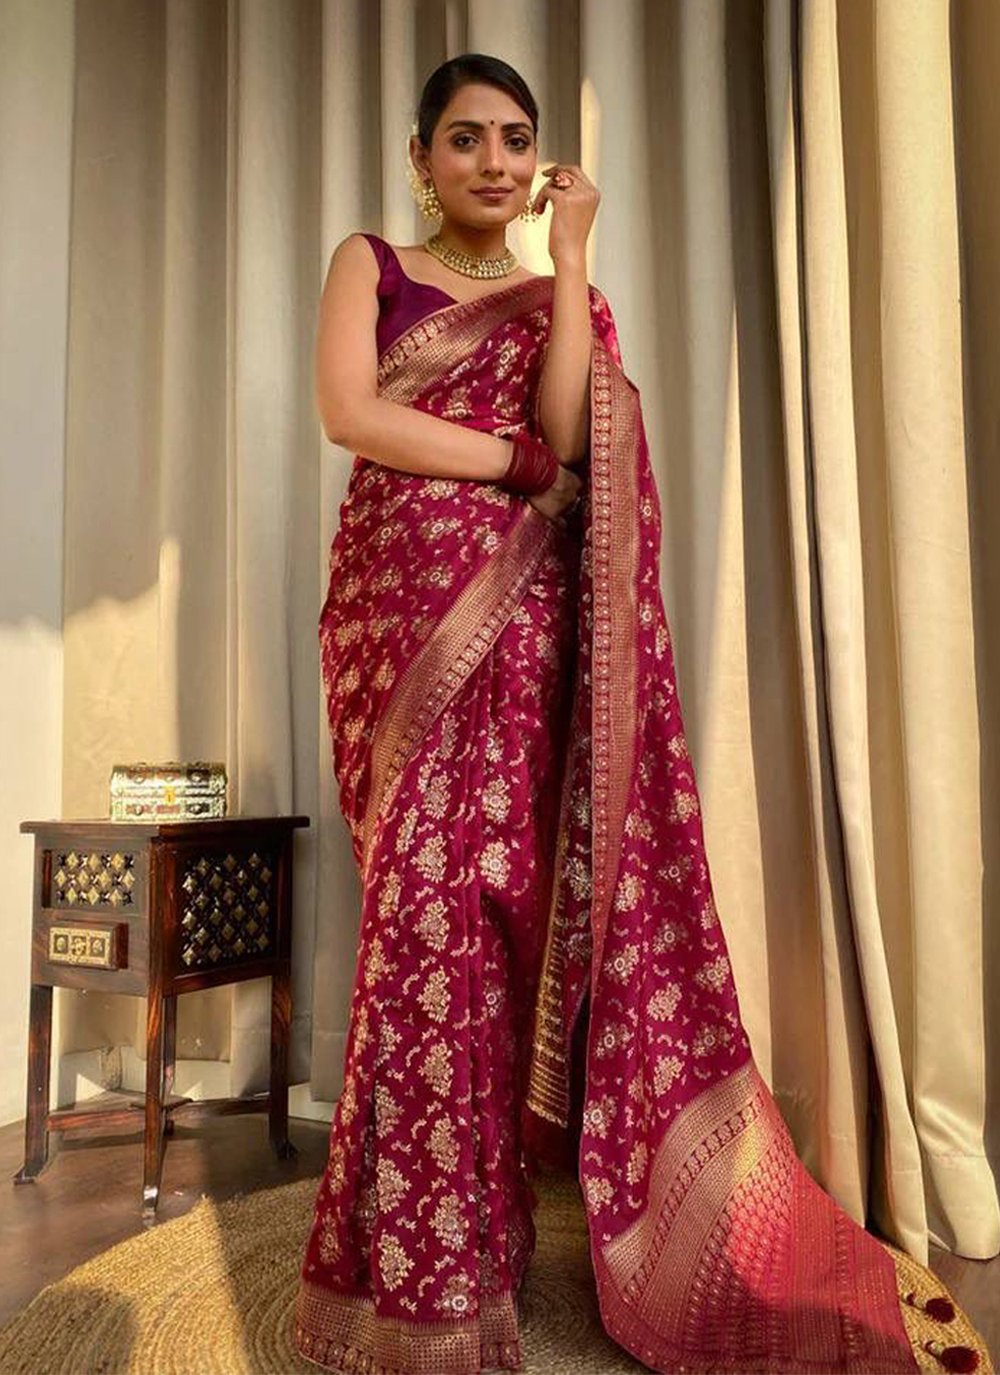 Saree by Ekaya. | Saree photoshoot, Indian photoshoot, Indian fashion